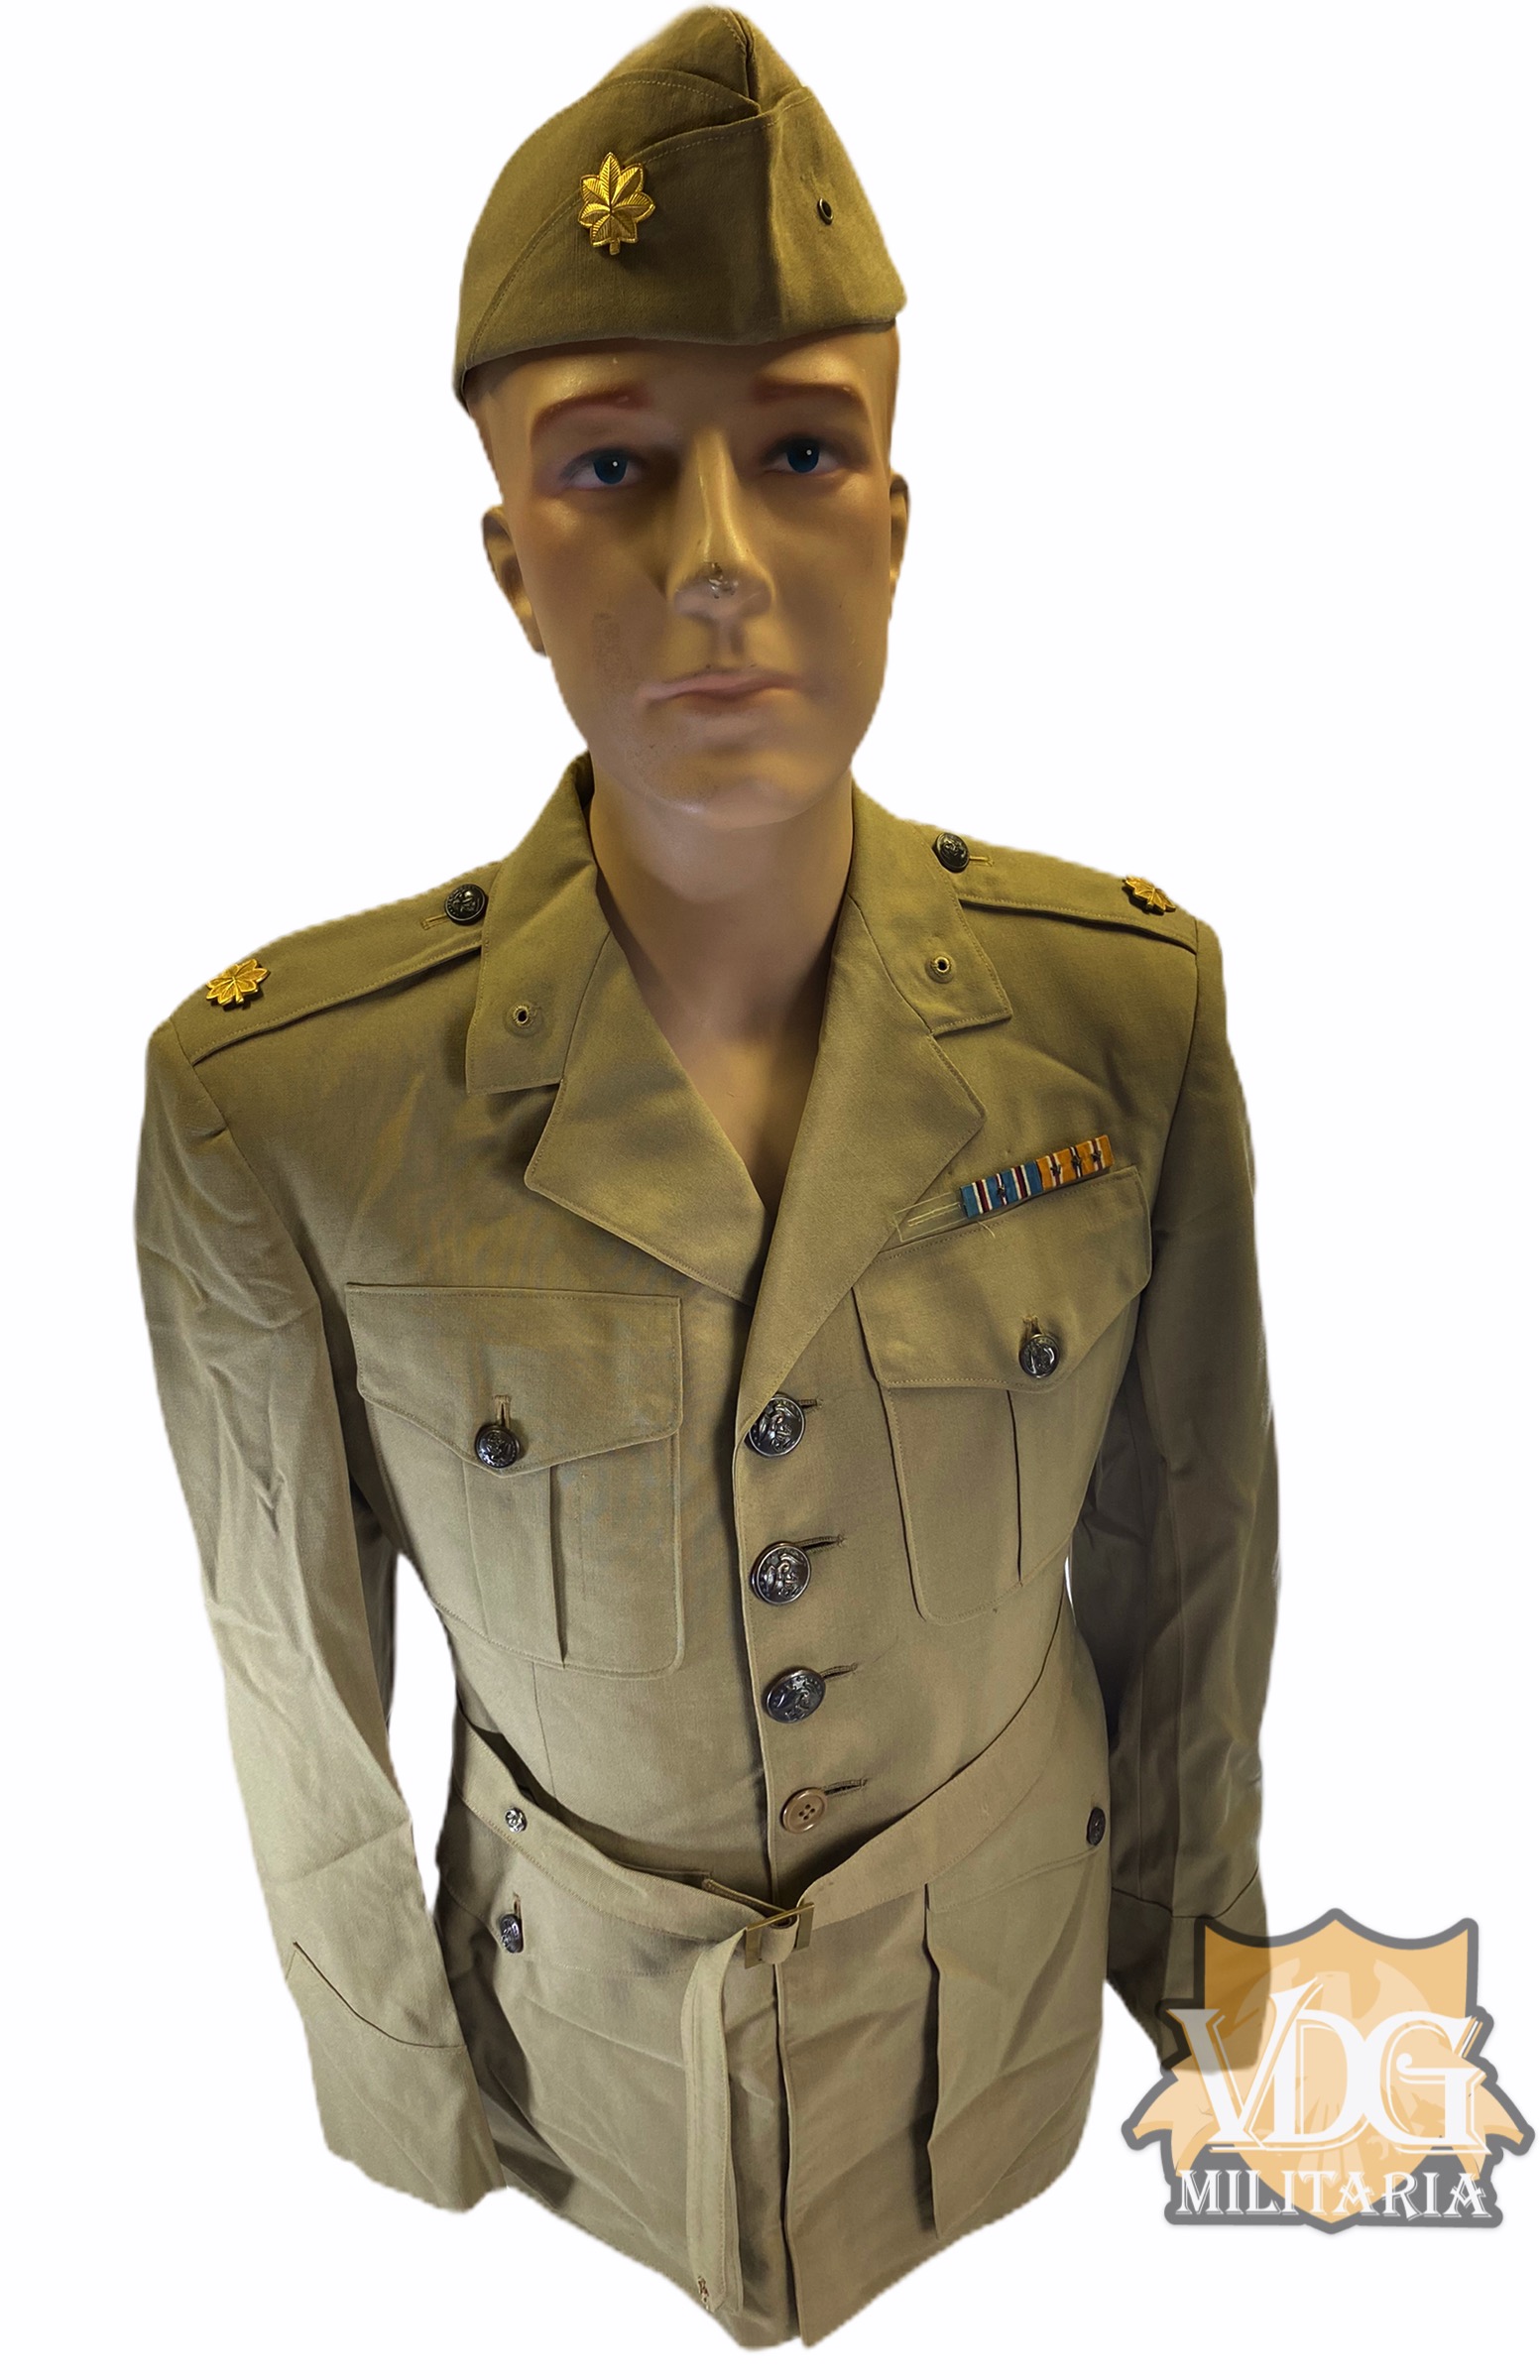 WW2 Era USMC Officers Khaki Uniform Group | VDG Militaria